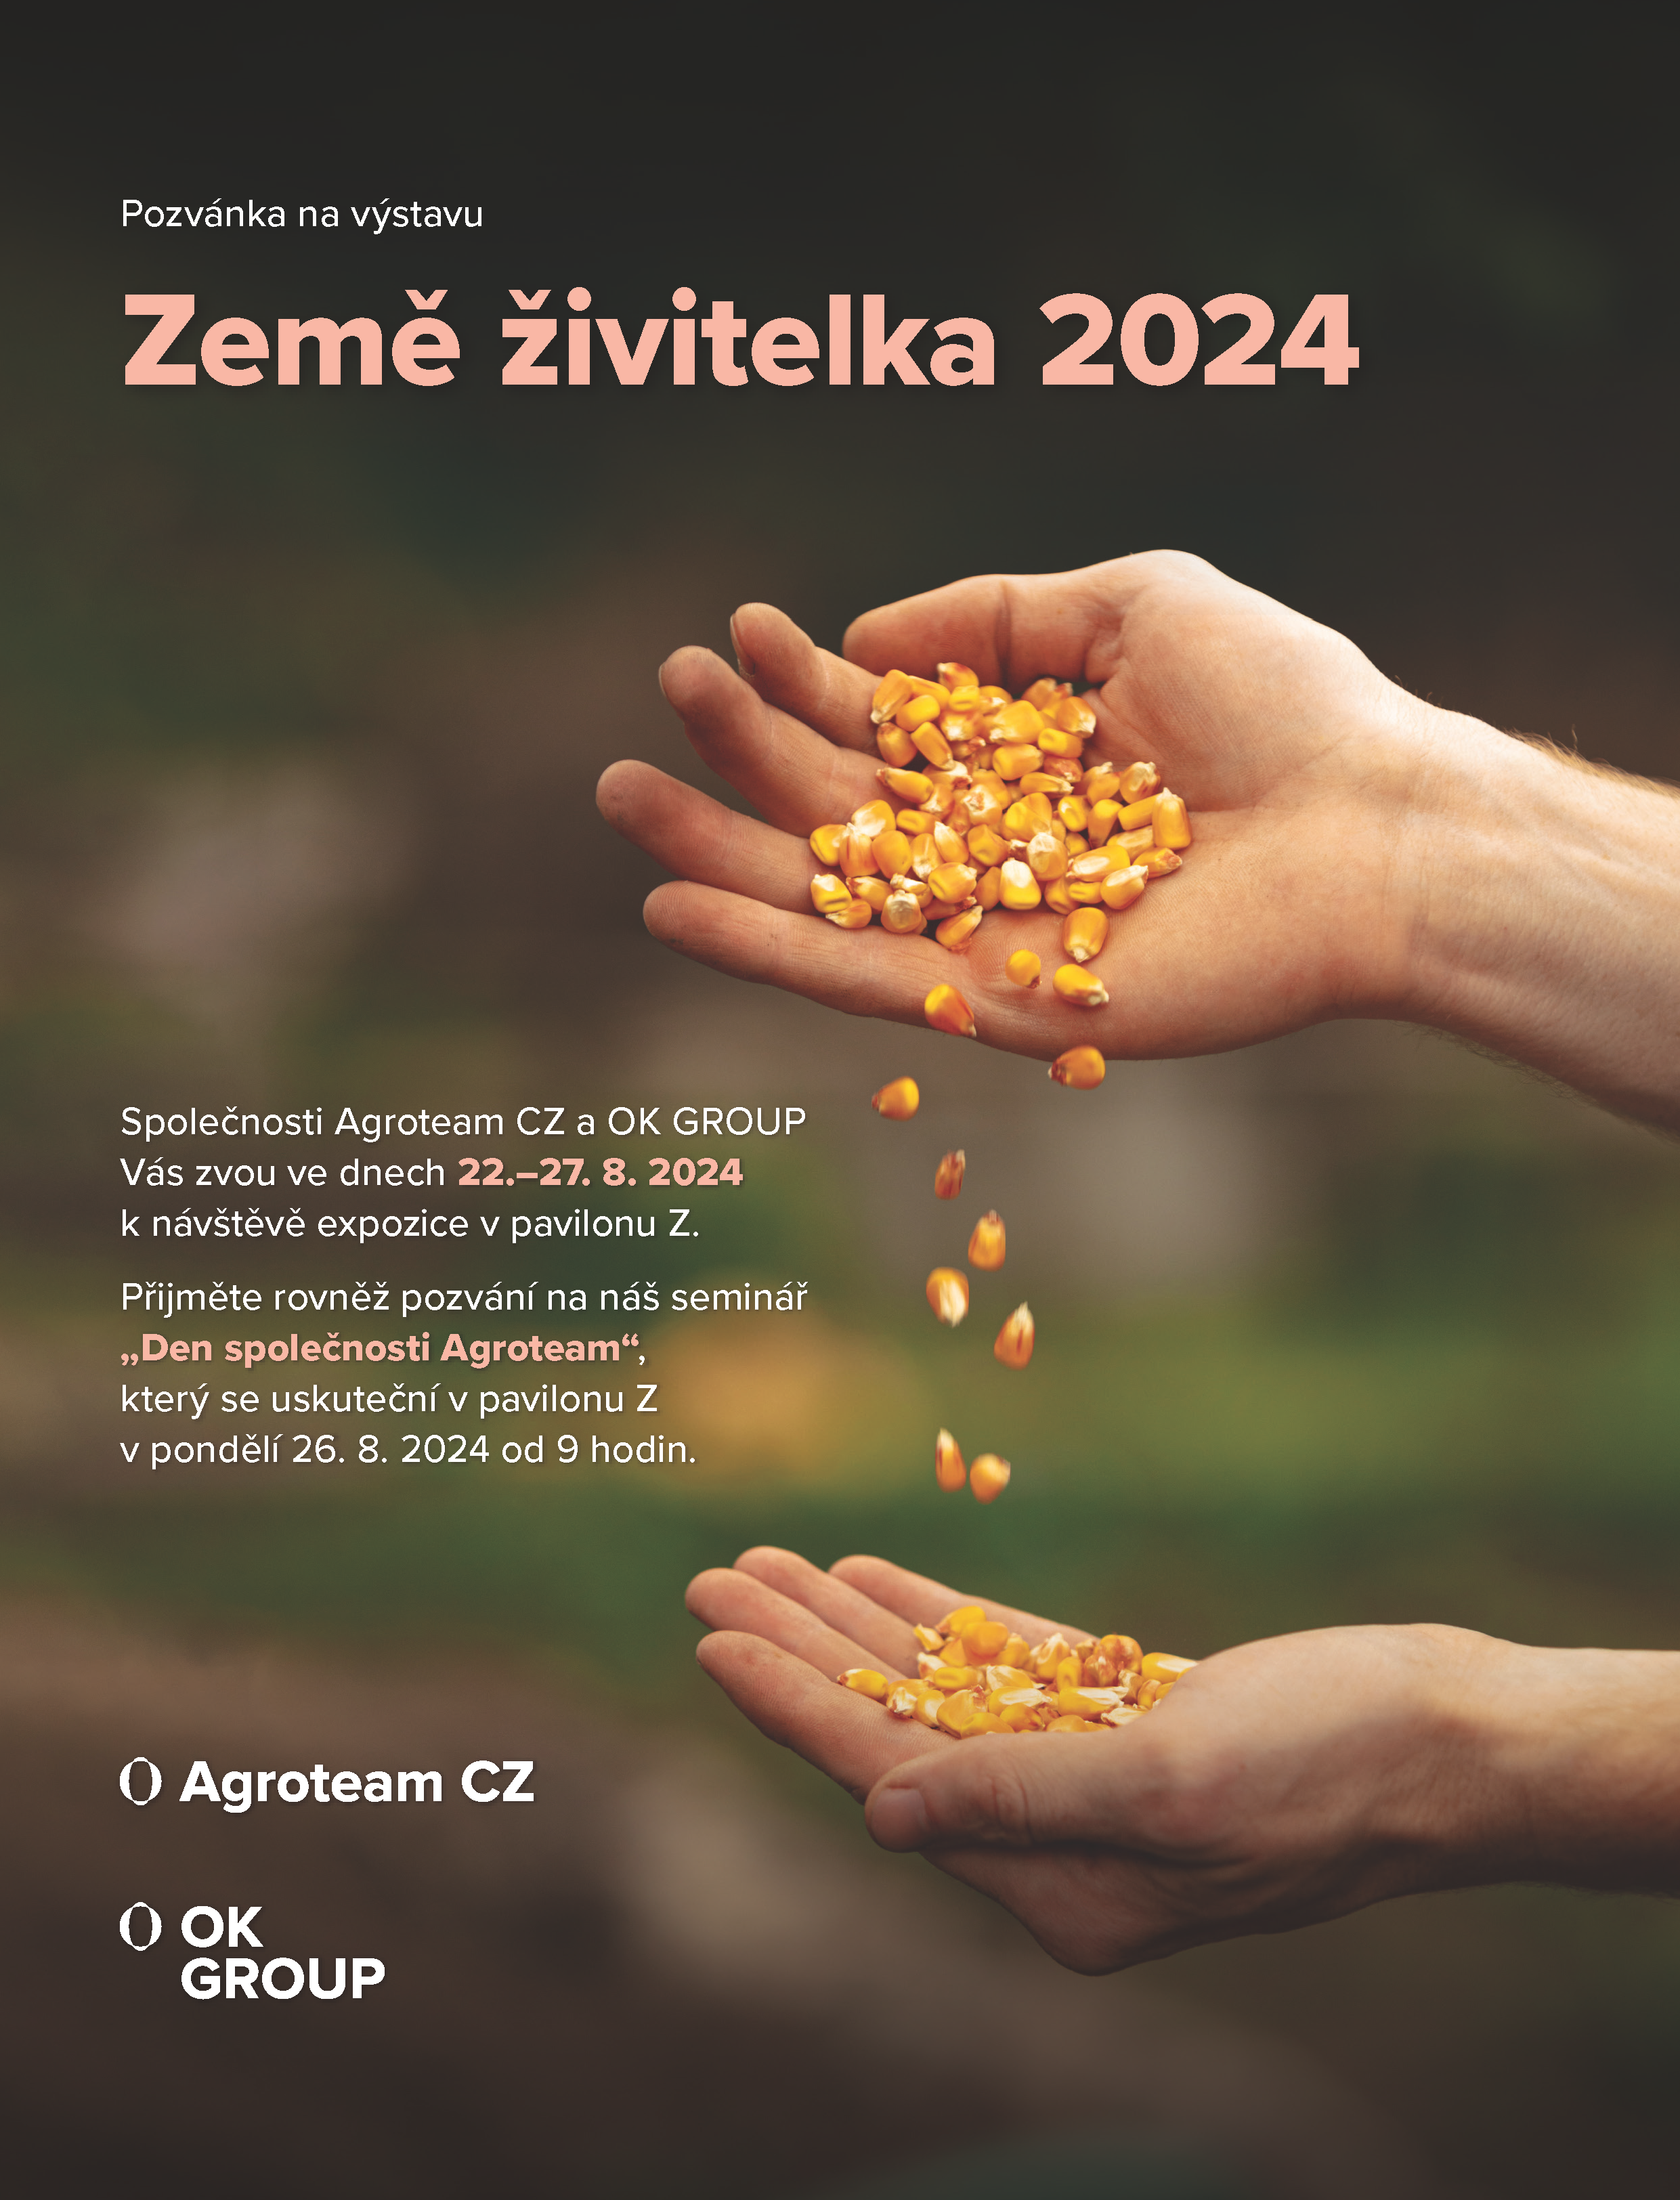 https://www.okbrokers.cz/media/aktuality/zeme-zivitelka-bulletin-210x275mm-1.png